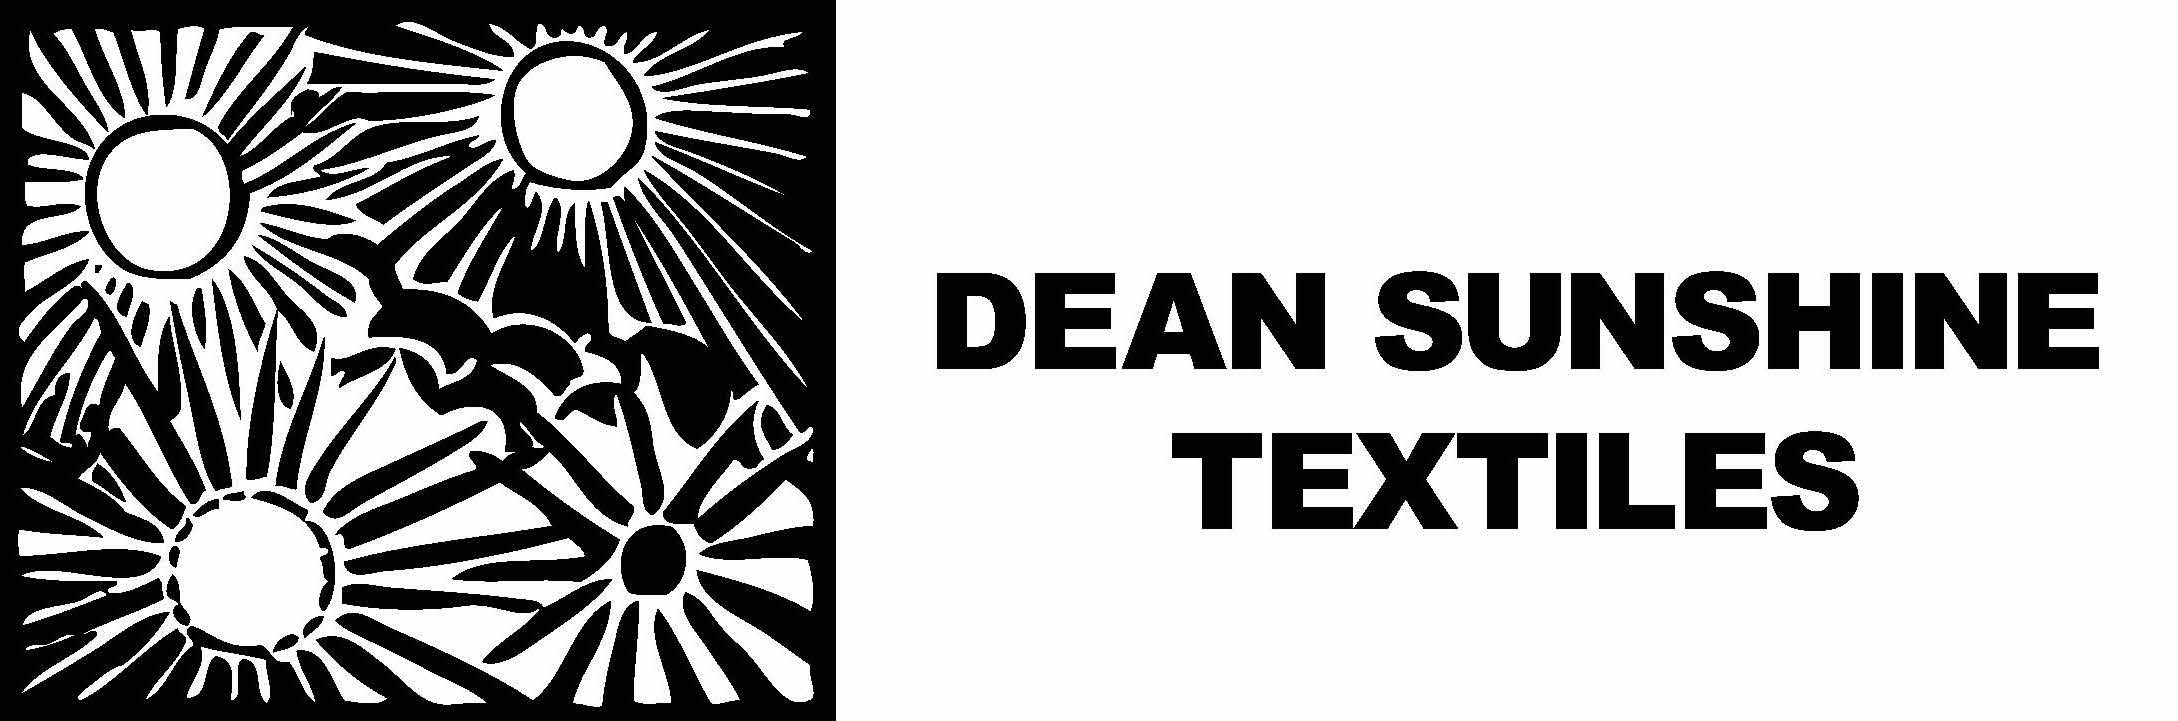 Dean Sunshine Textiles